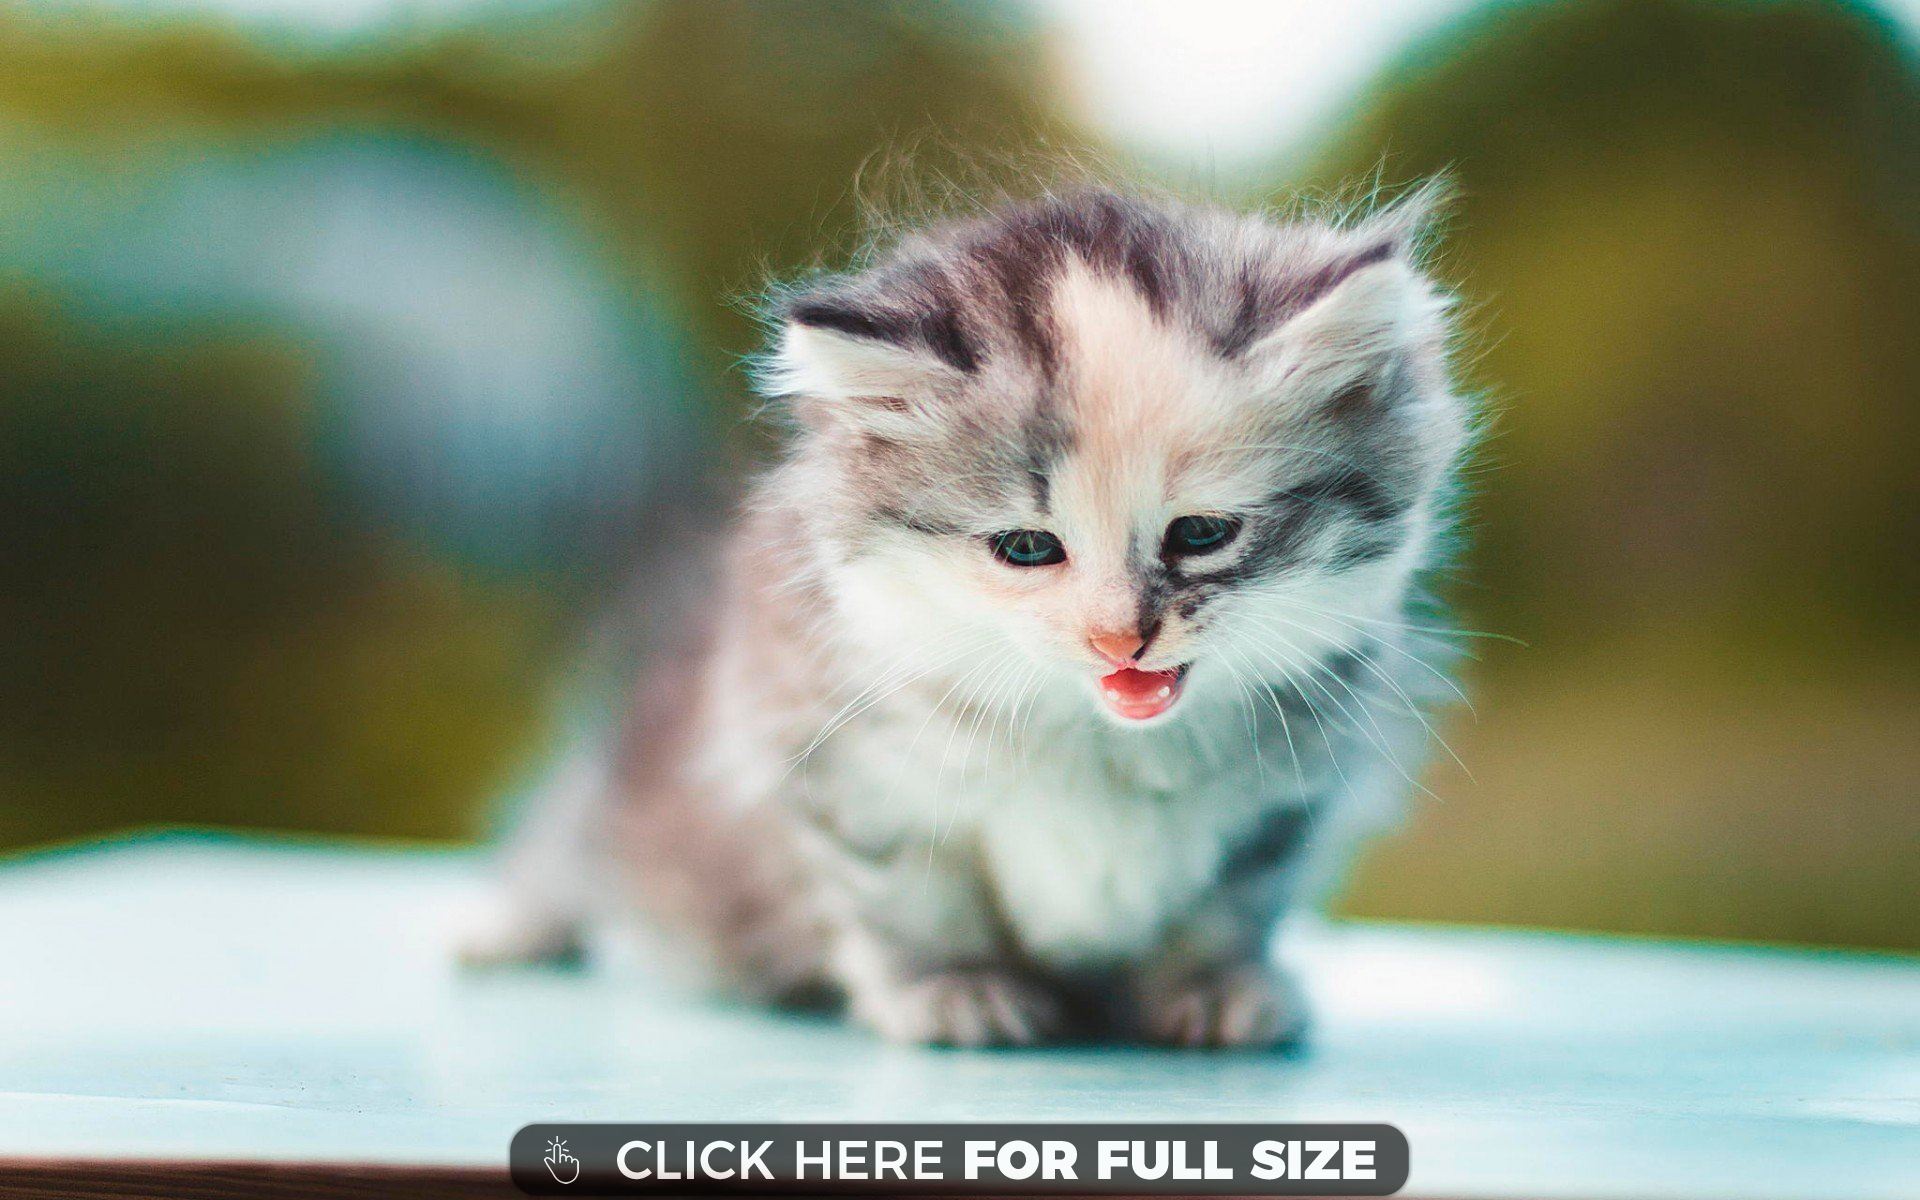 Kitten Wallpaper Photos And Desktop Background Up To 8k